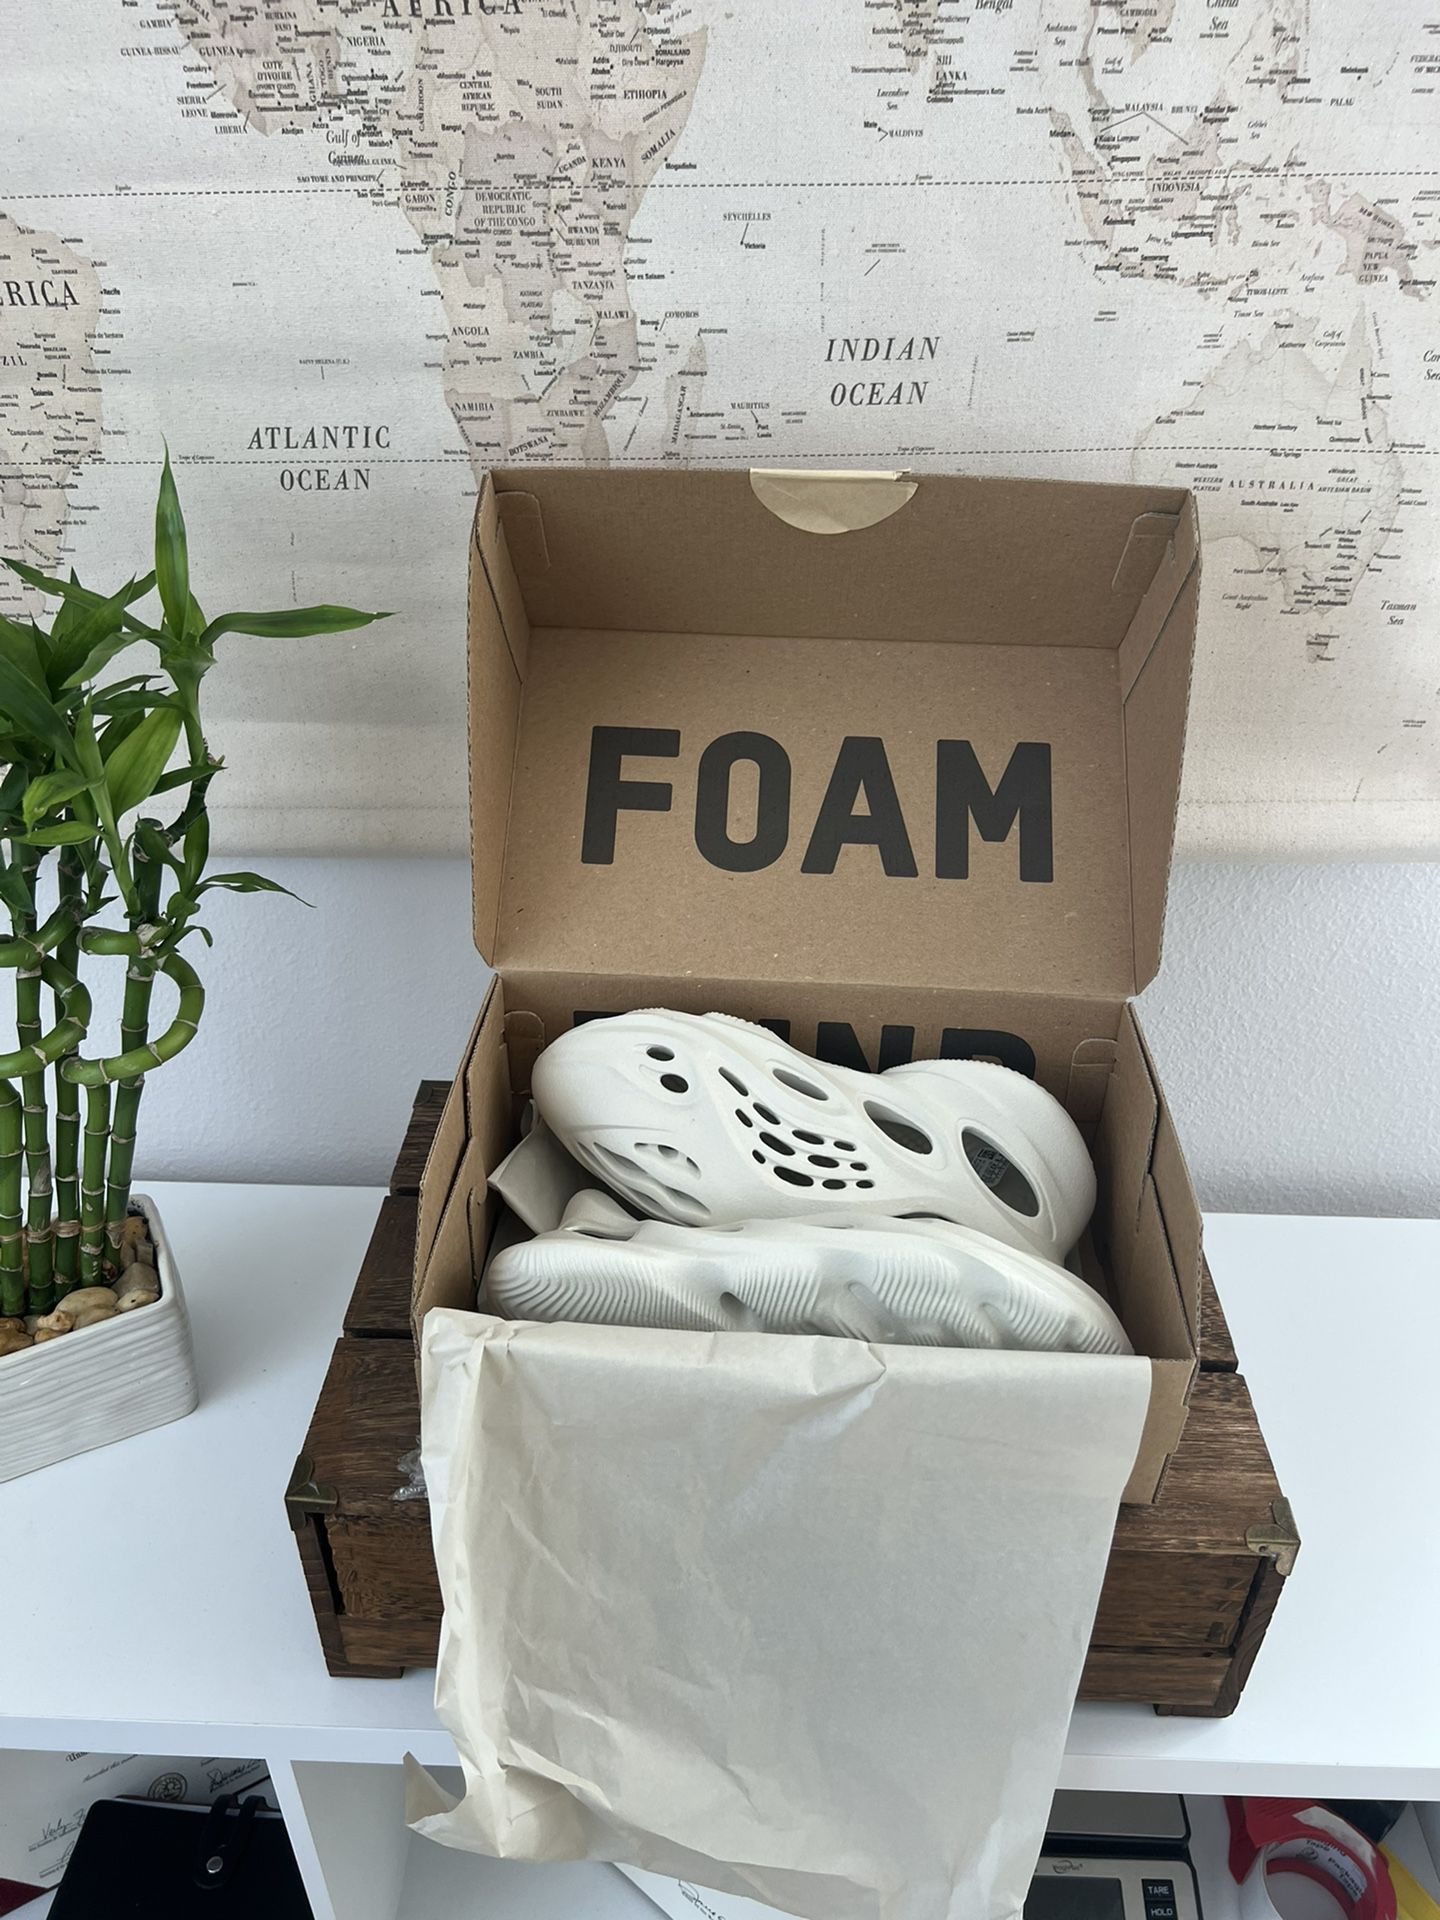 Yeezy Foam Runner Ararat Size 8 - New - Authentic 